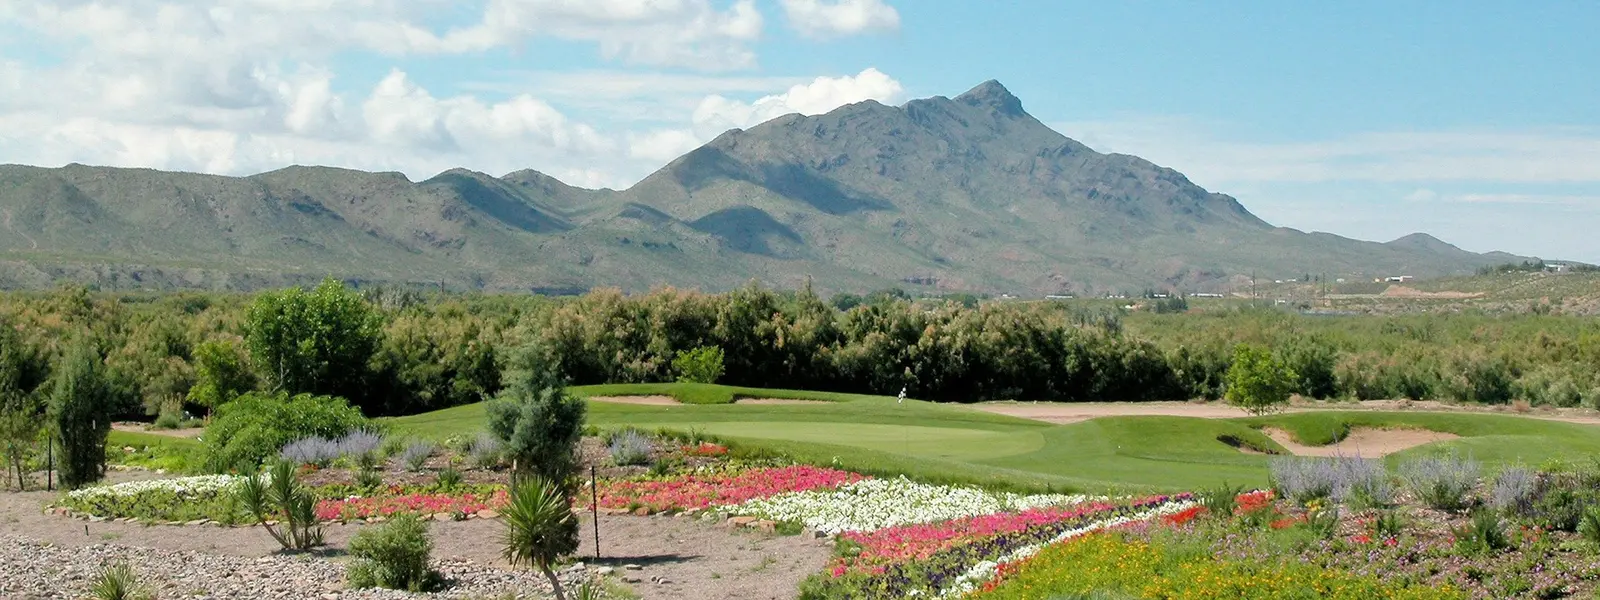 Sierra del Rio Golf Course at Turtleback Mountain Resort